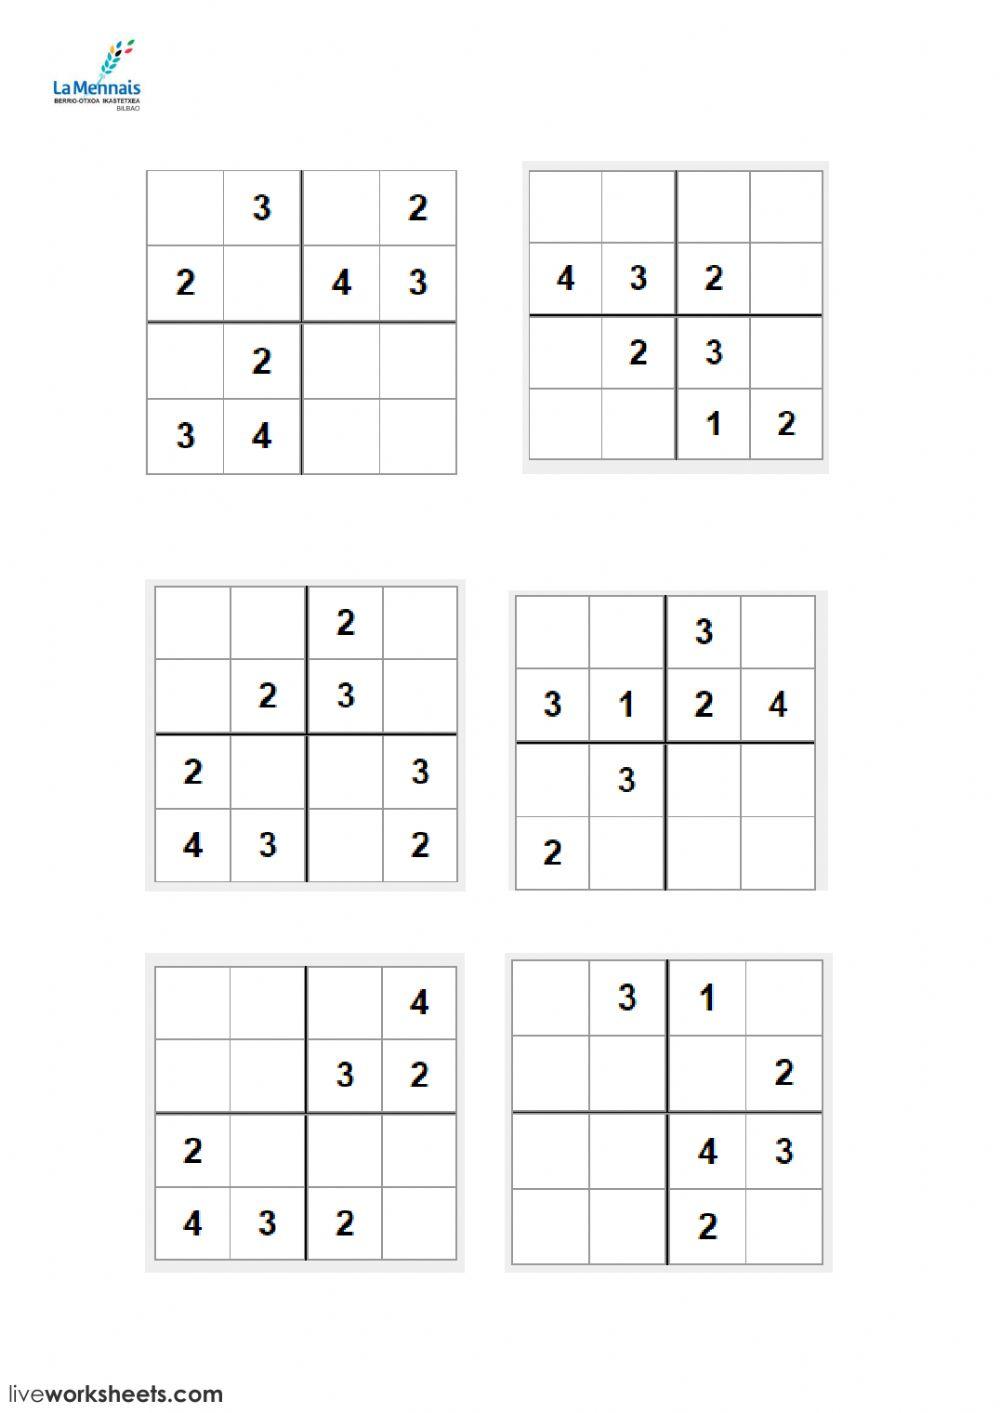 Sudoku online exercise for 3º ano